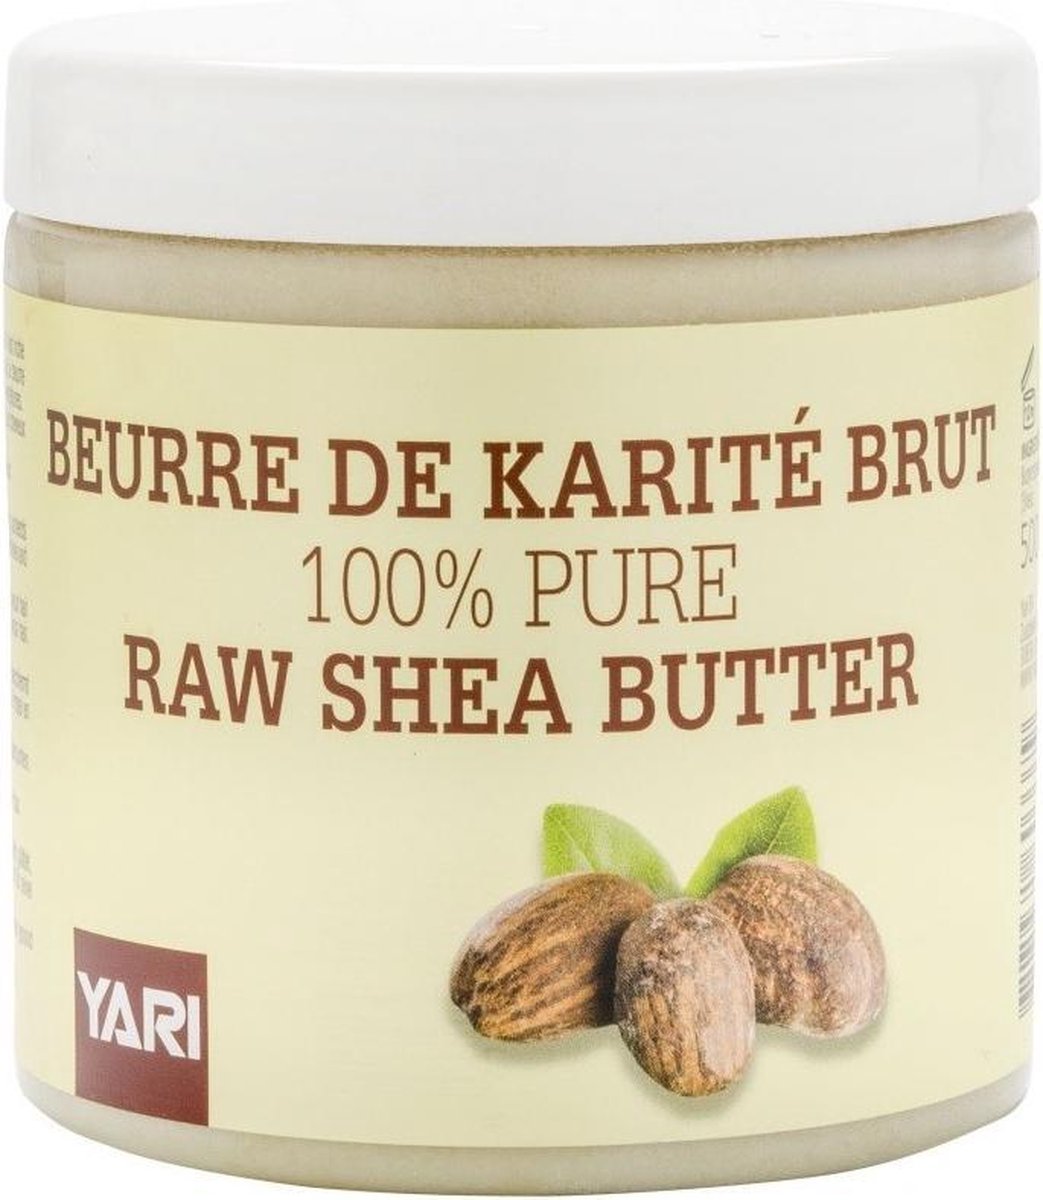 Renovatie vernieuwen Bewusteloos Yari 100% Pure Raw Shea Butter 500gr | bol.com